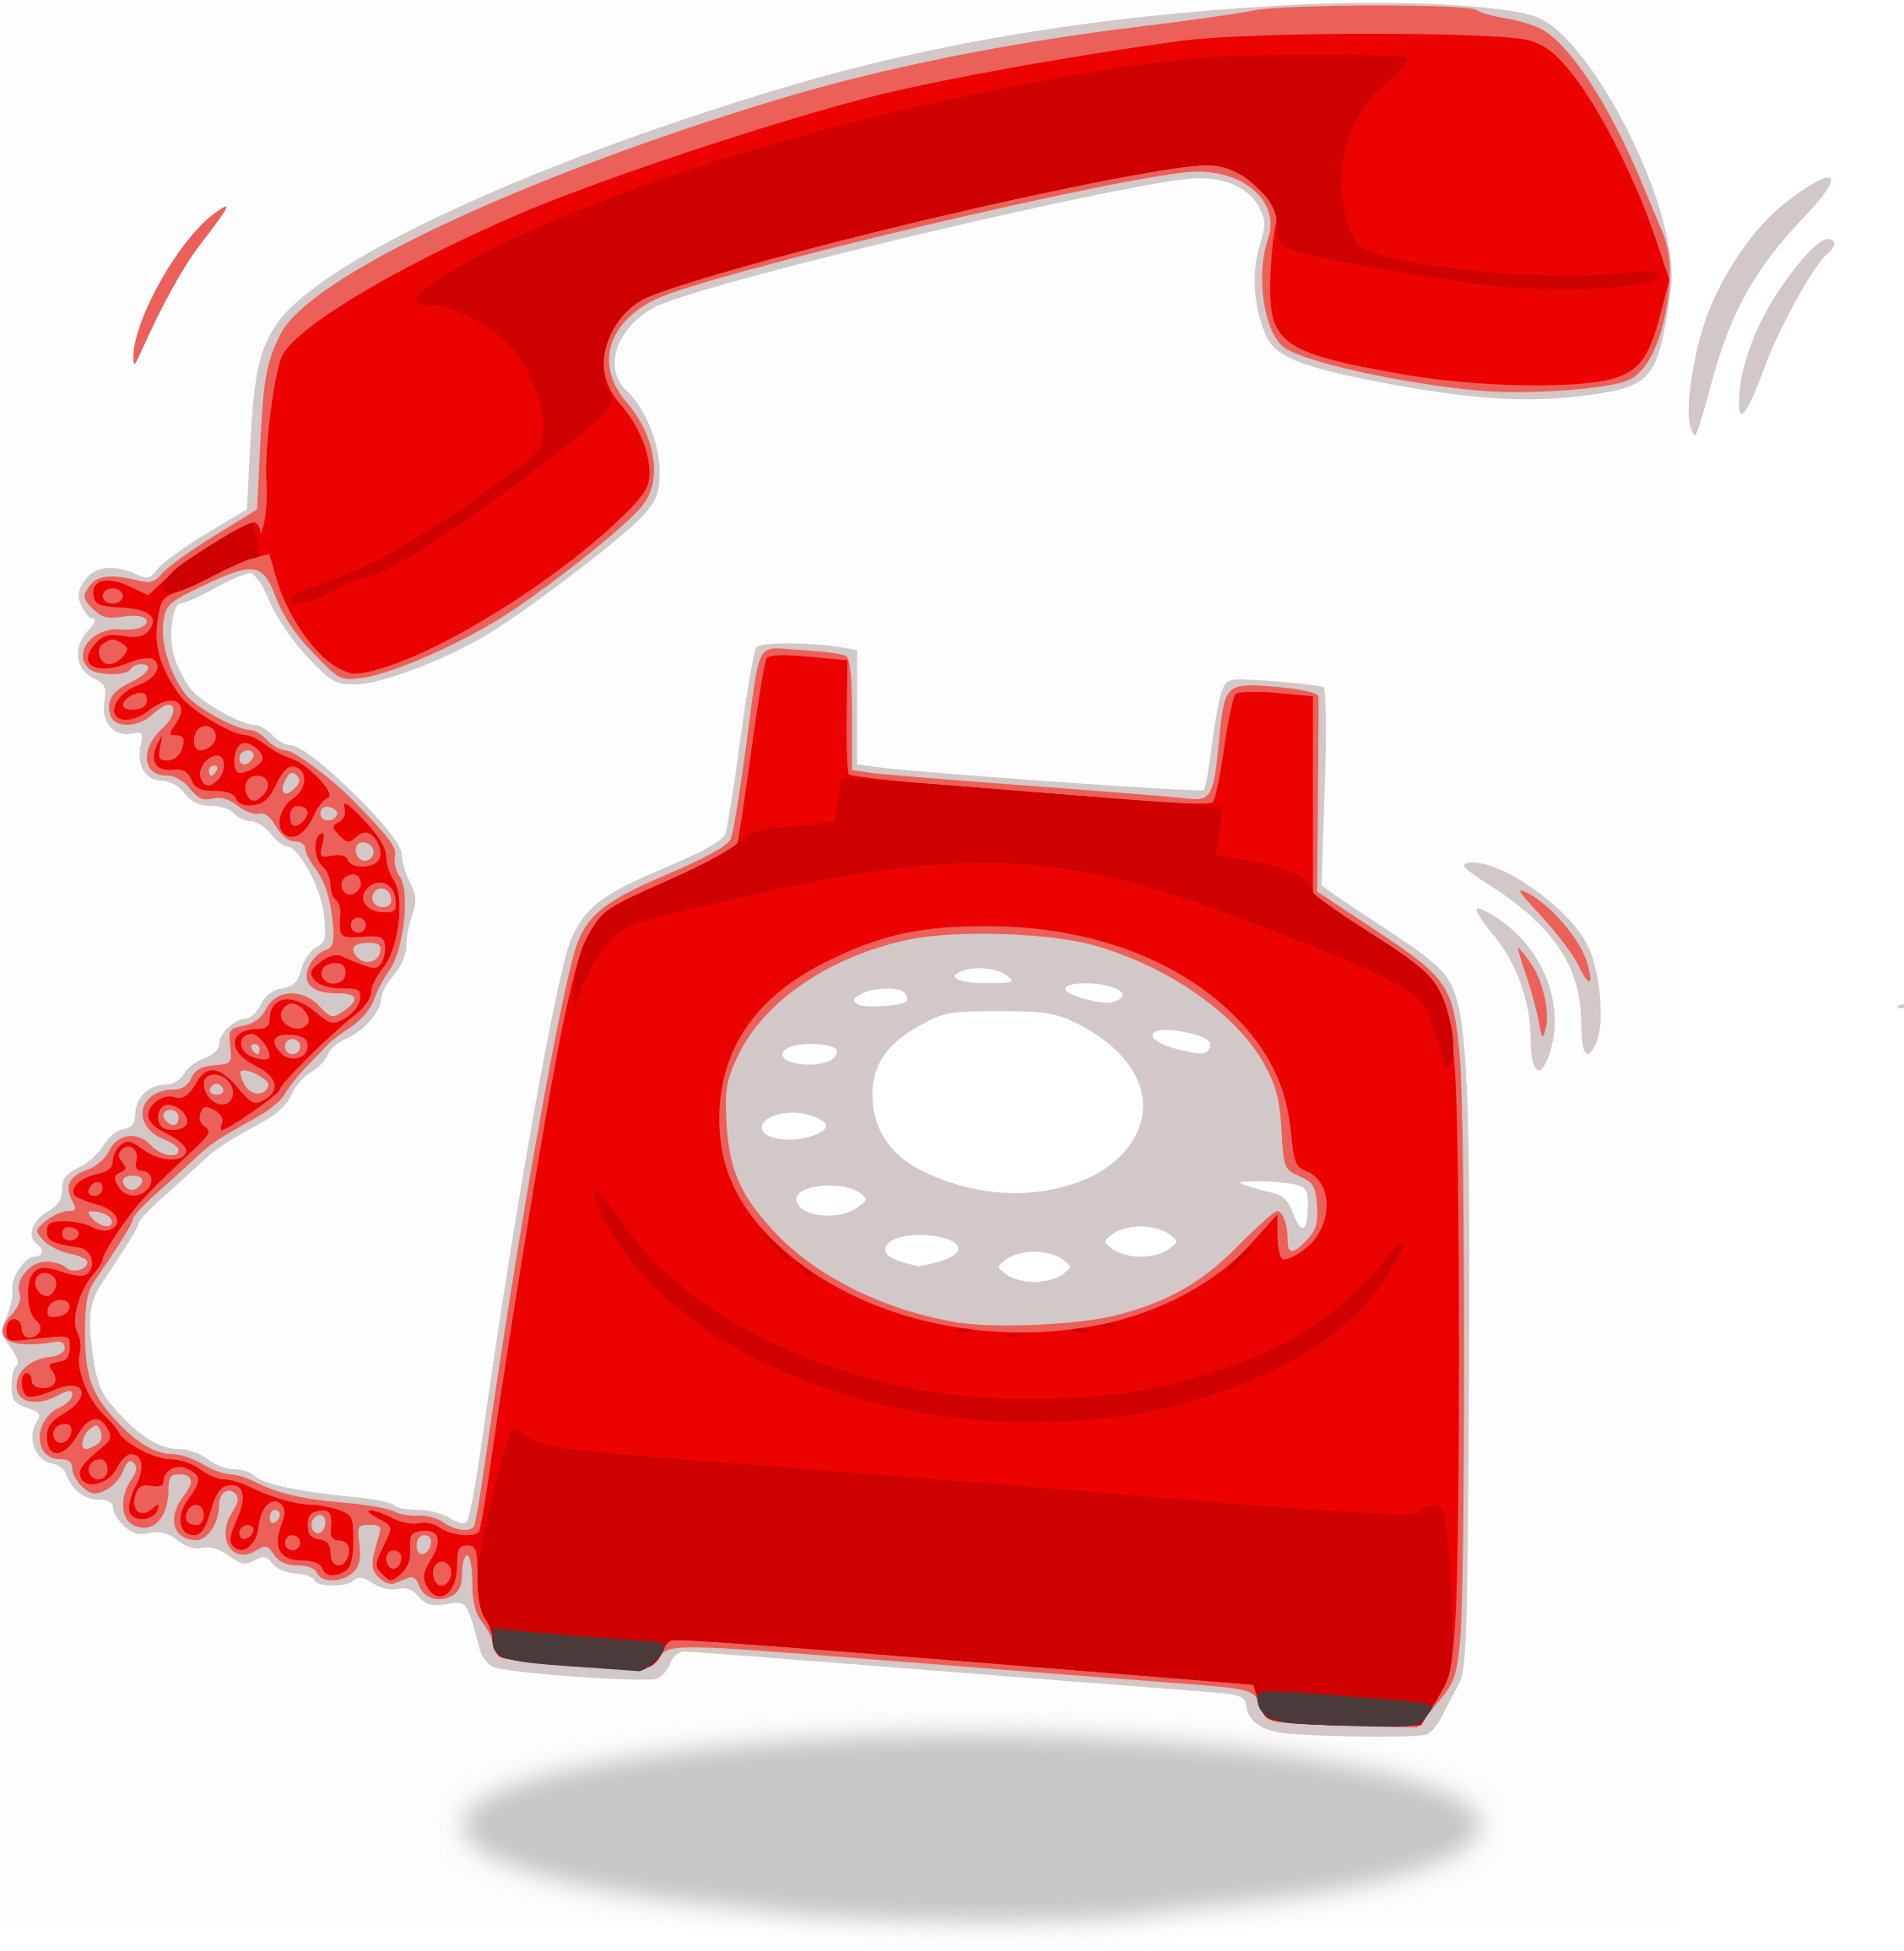 Red Telephon - Telephone Ringing (2400x2400)